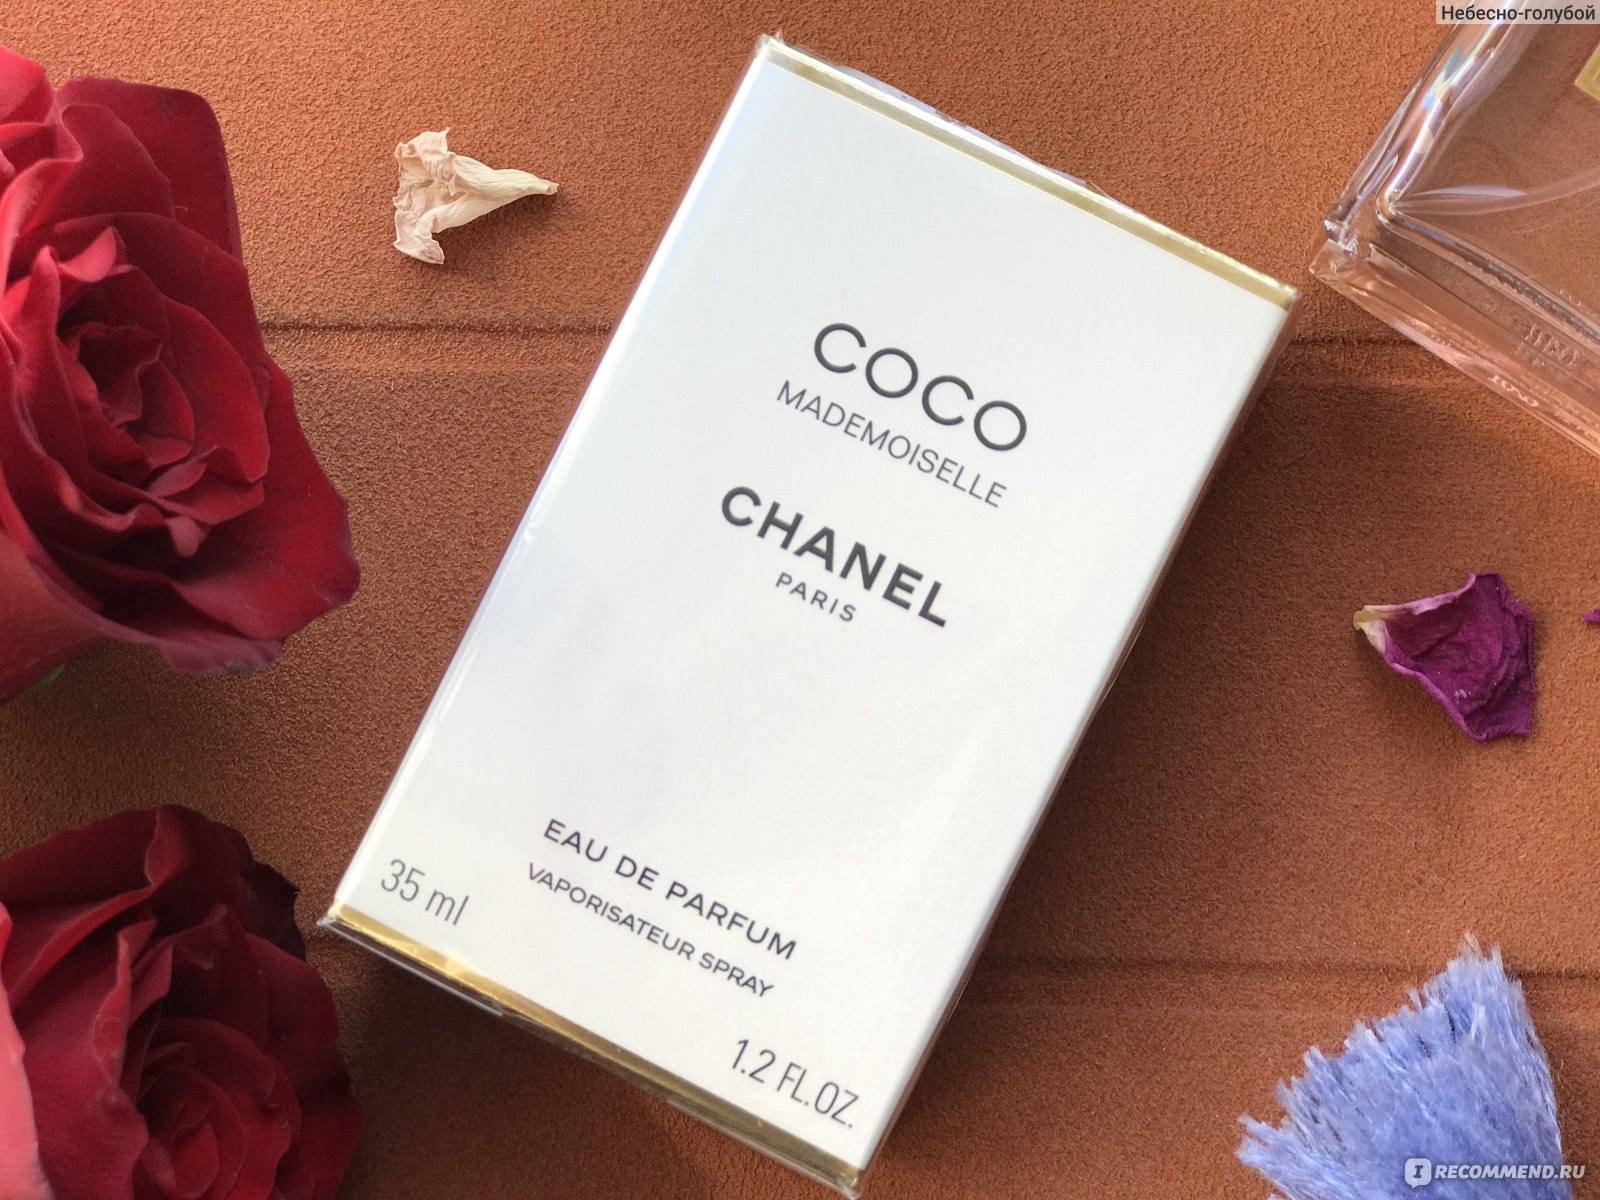 coco mademoiselle chanel описание аромата отзывы